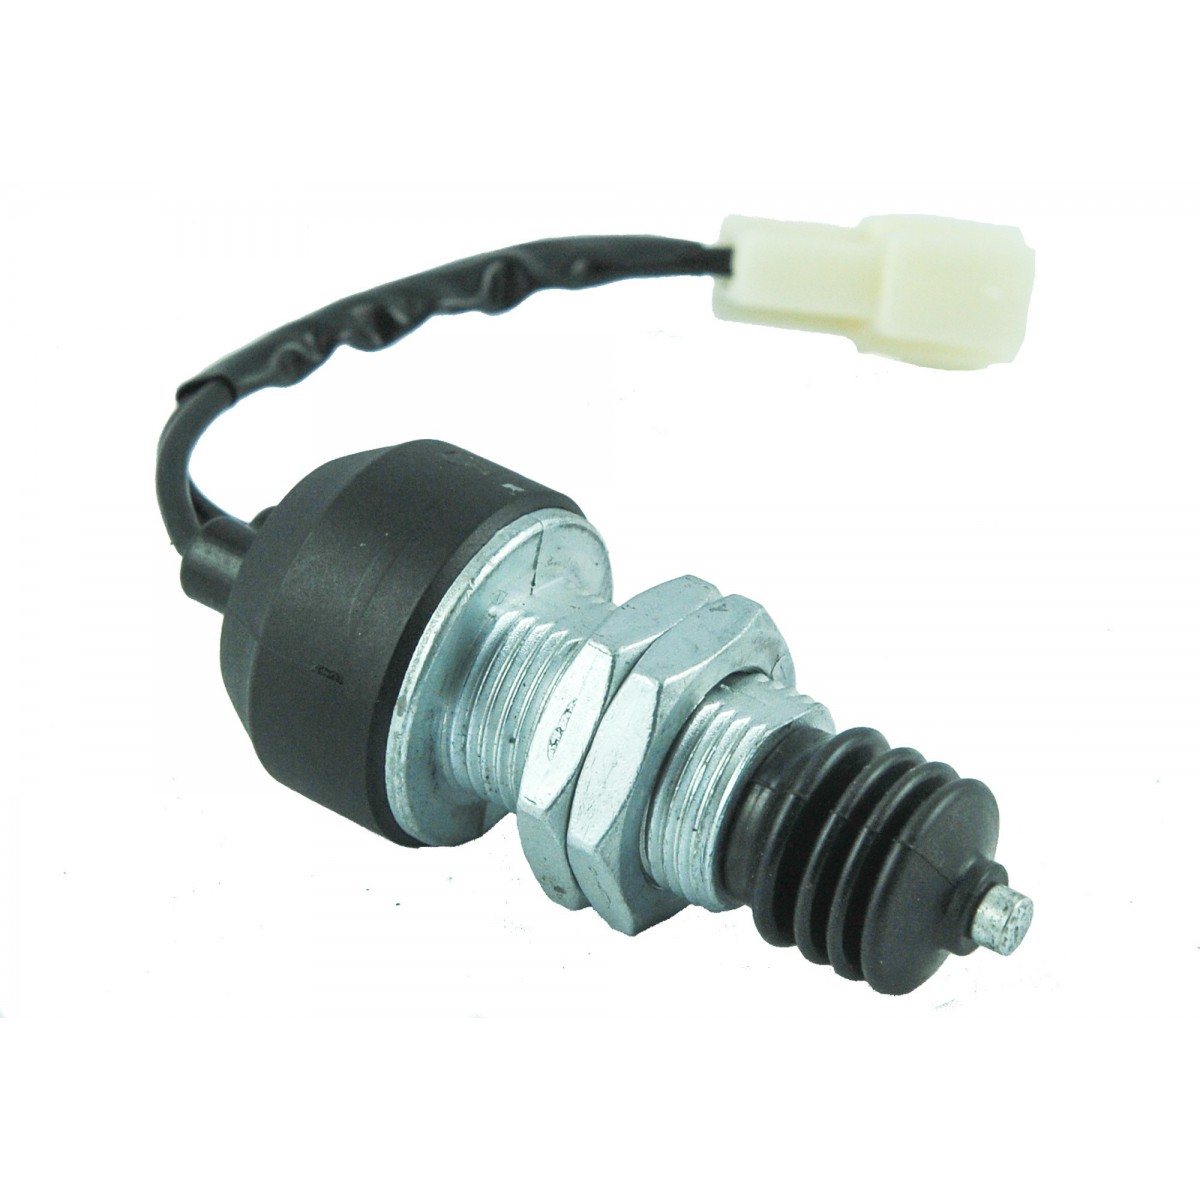 Kubota clutch pedal position sensor L2808-L3408, DC60, DC68